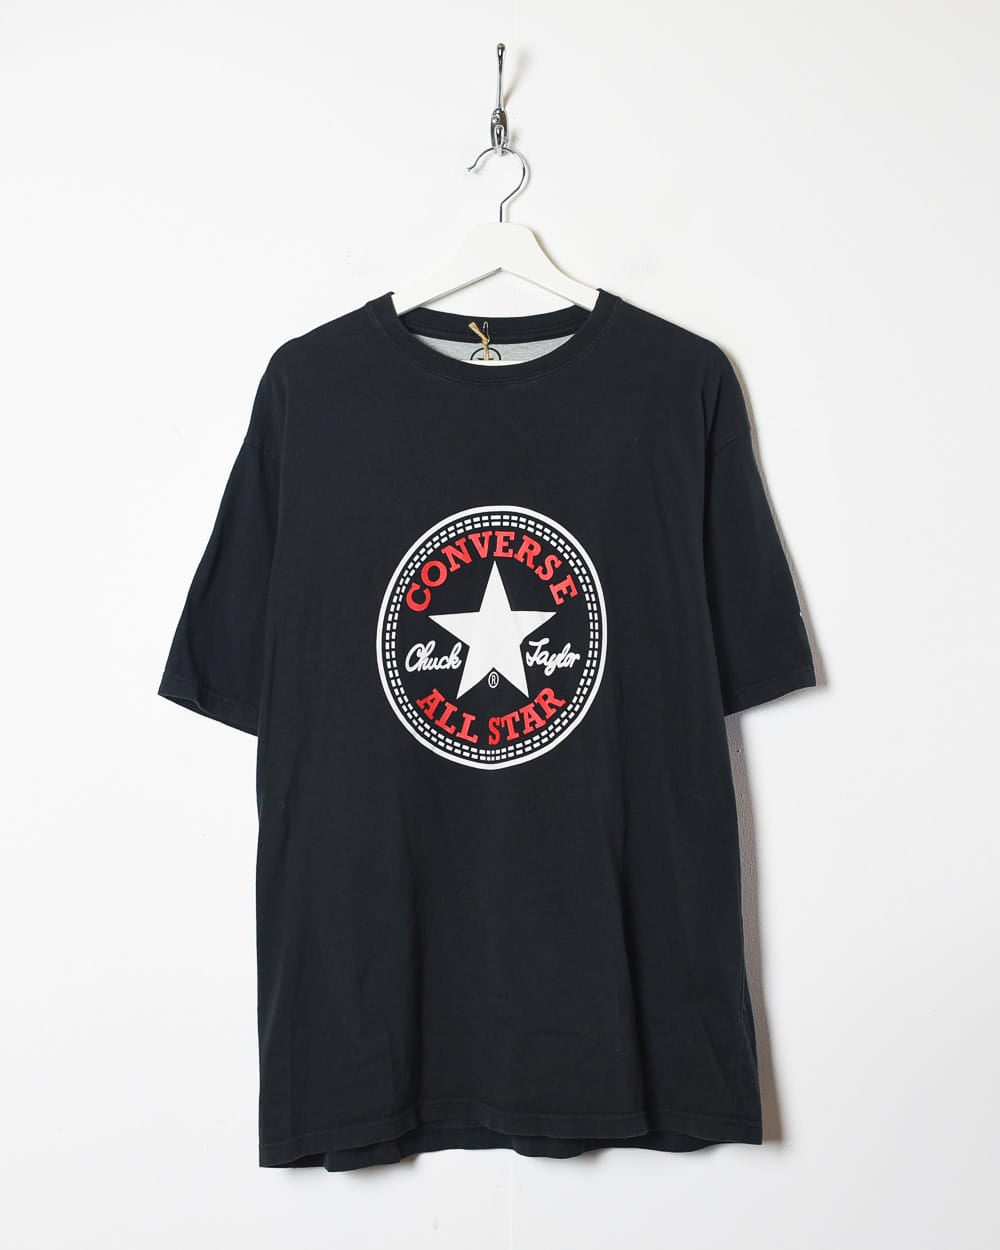 Converse All Star T-Shirt - X-Large